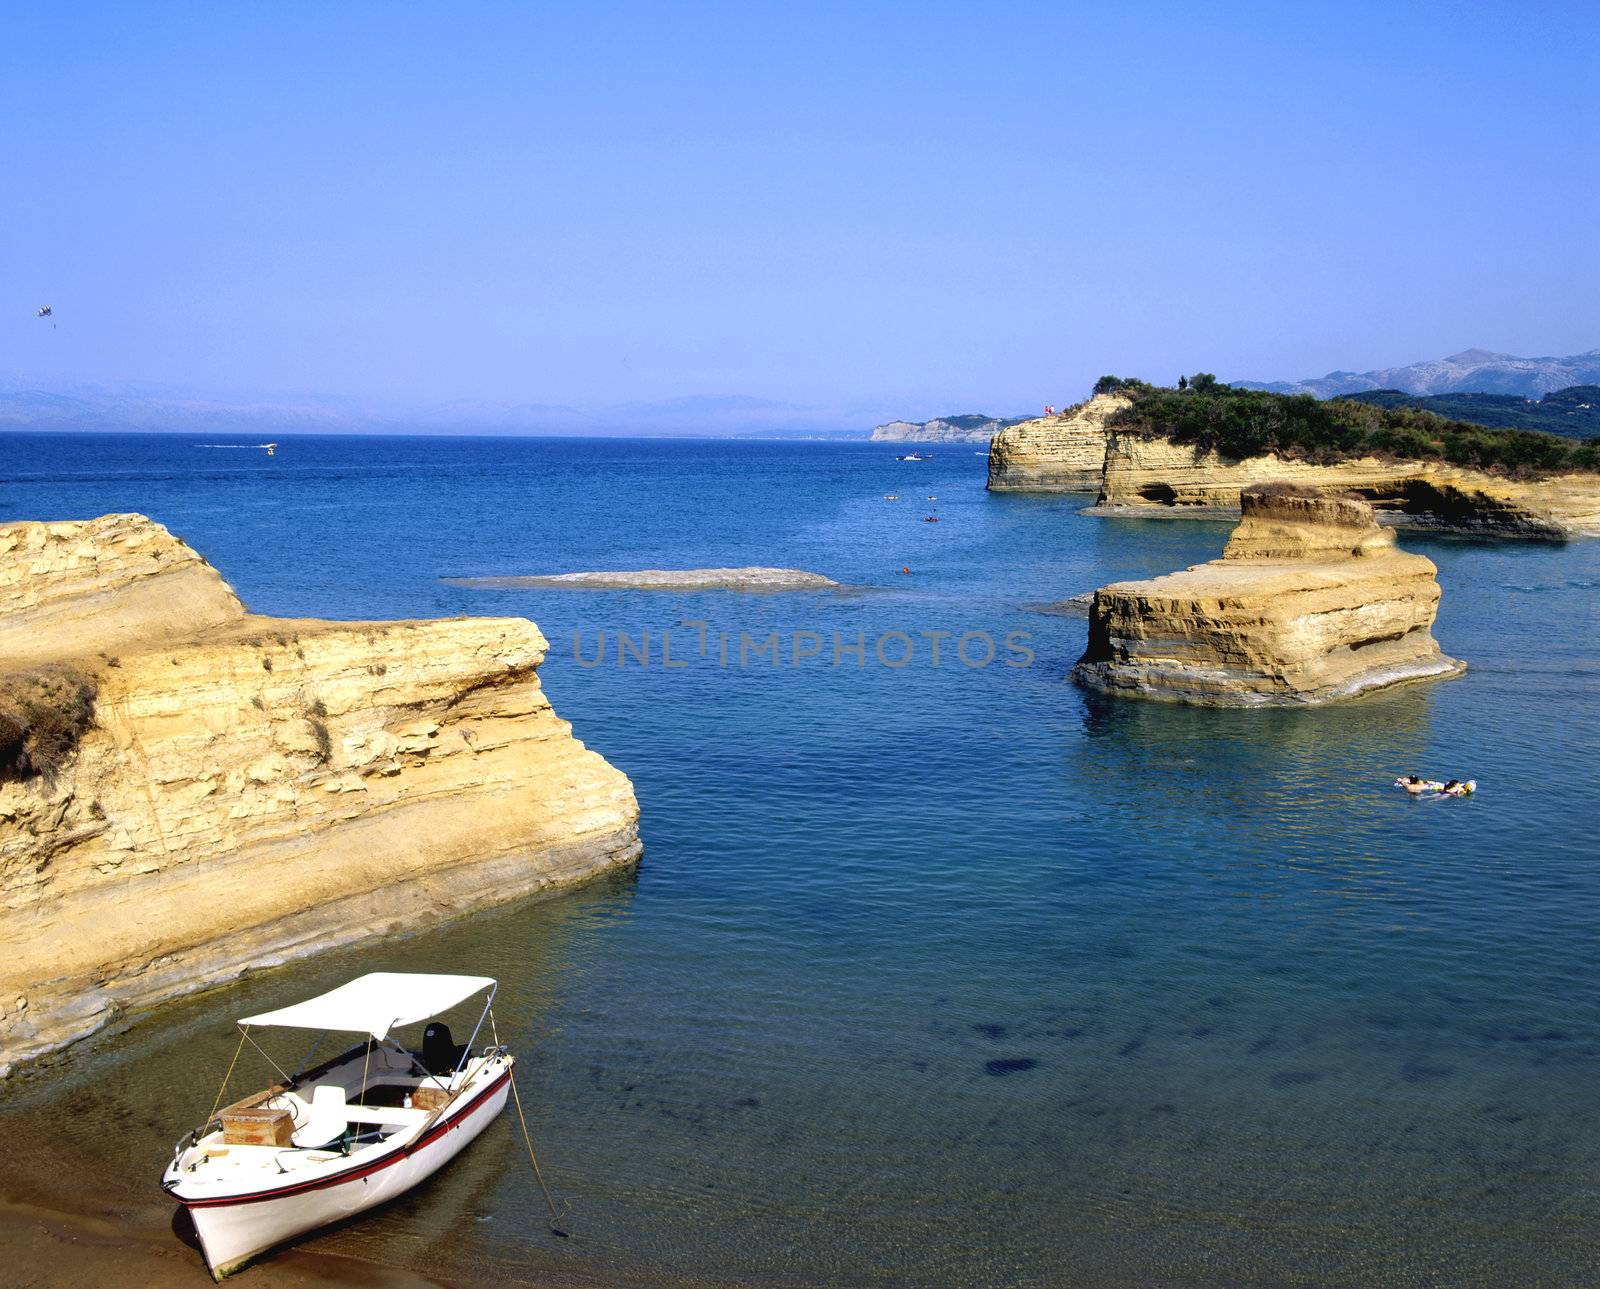 The interesting coastline of Sidari, on the greek island of Corfu